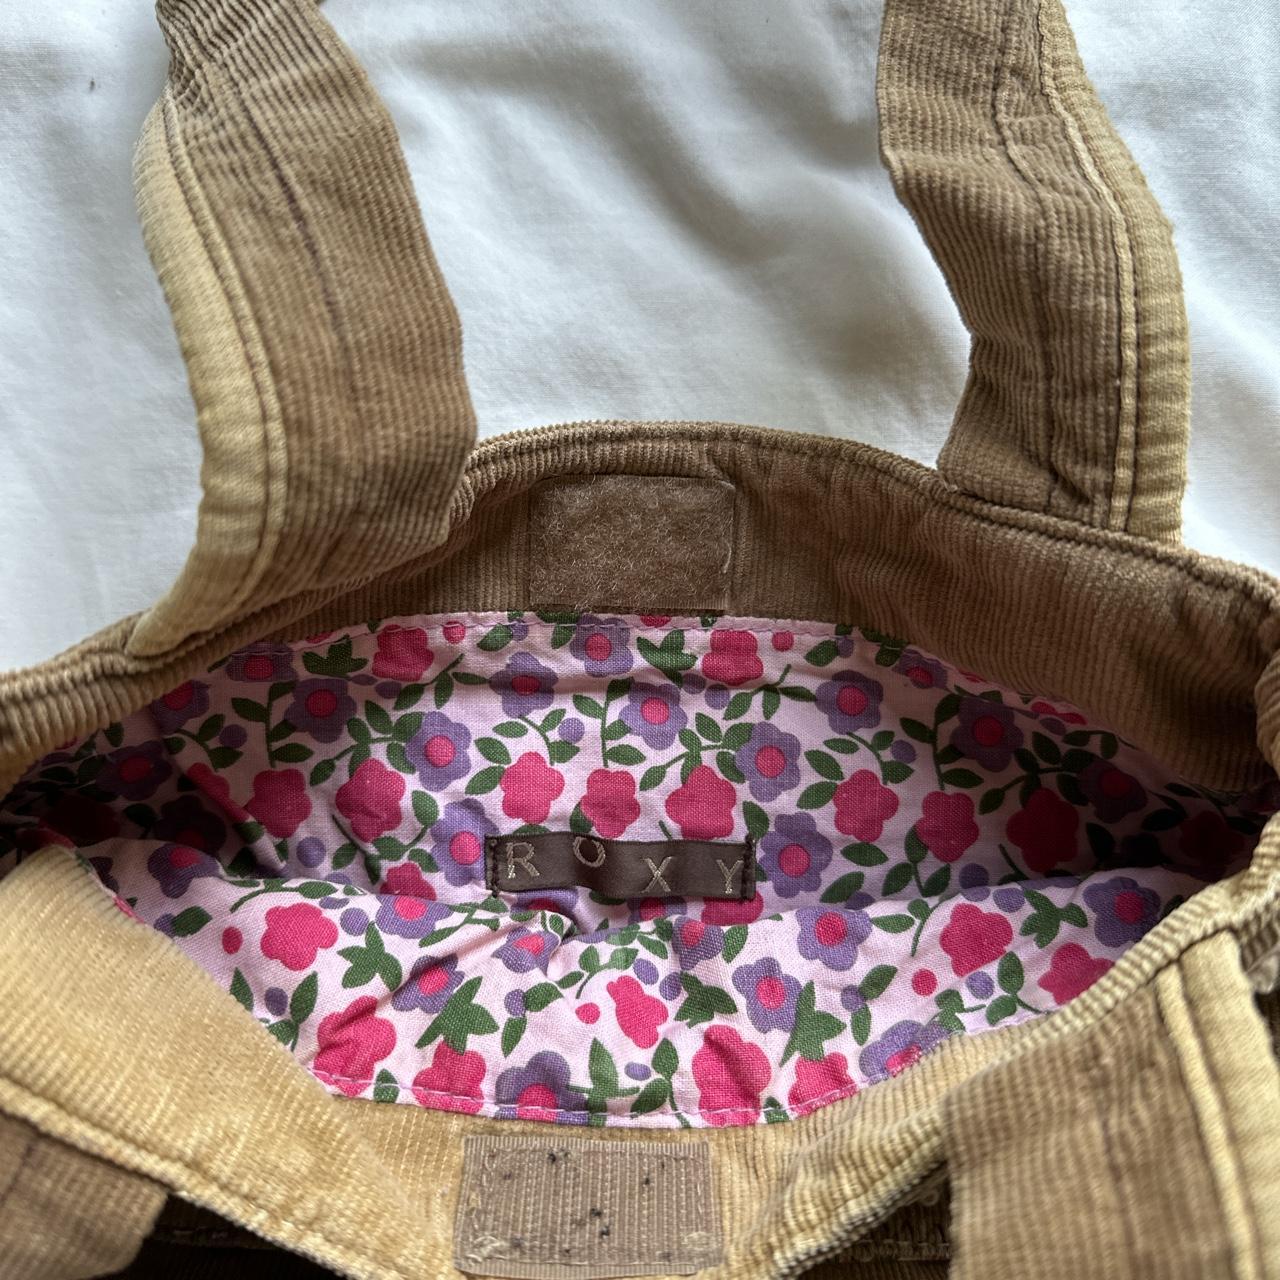 Roxy Women's Tan and Pink Bag (4)